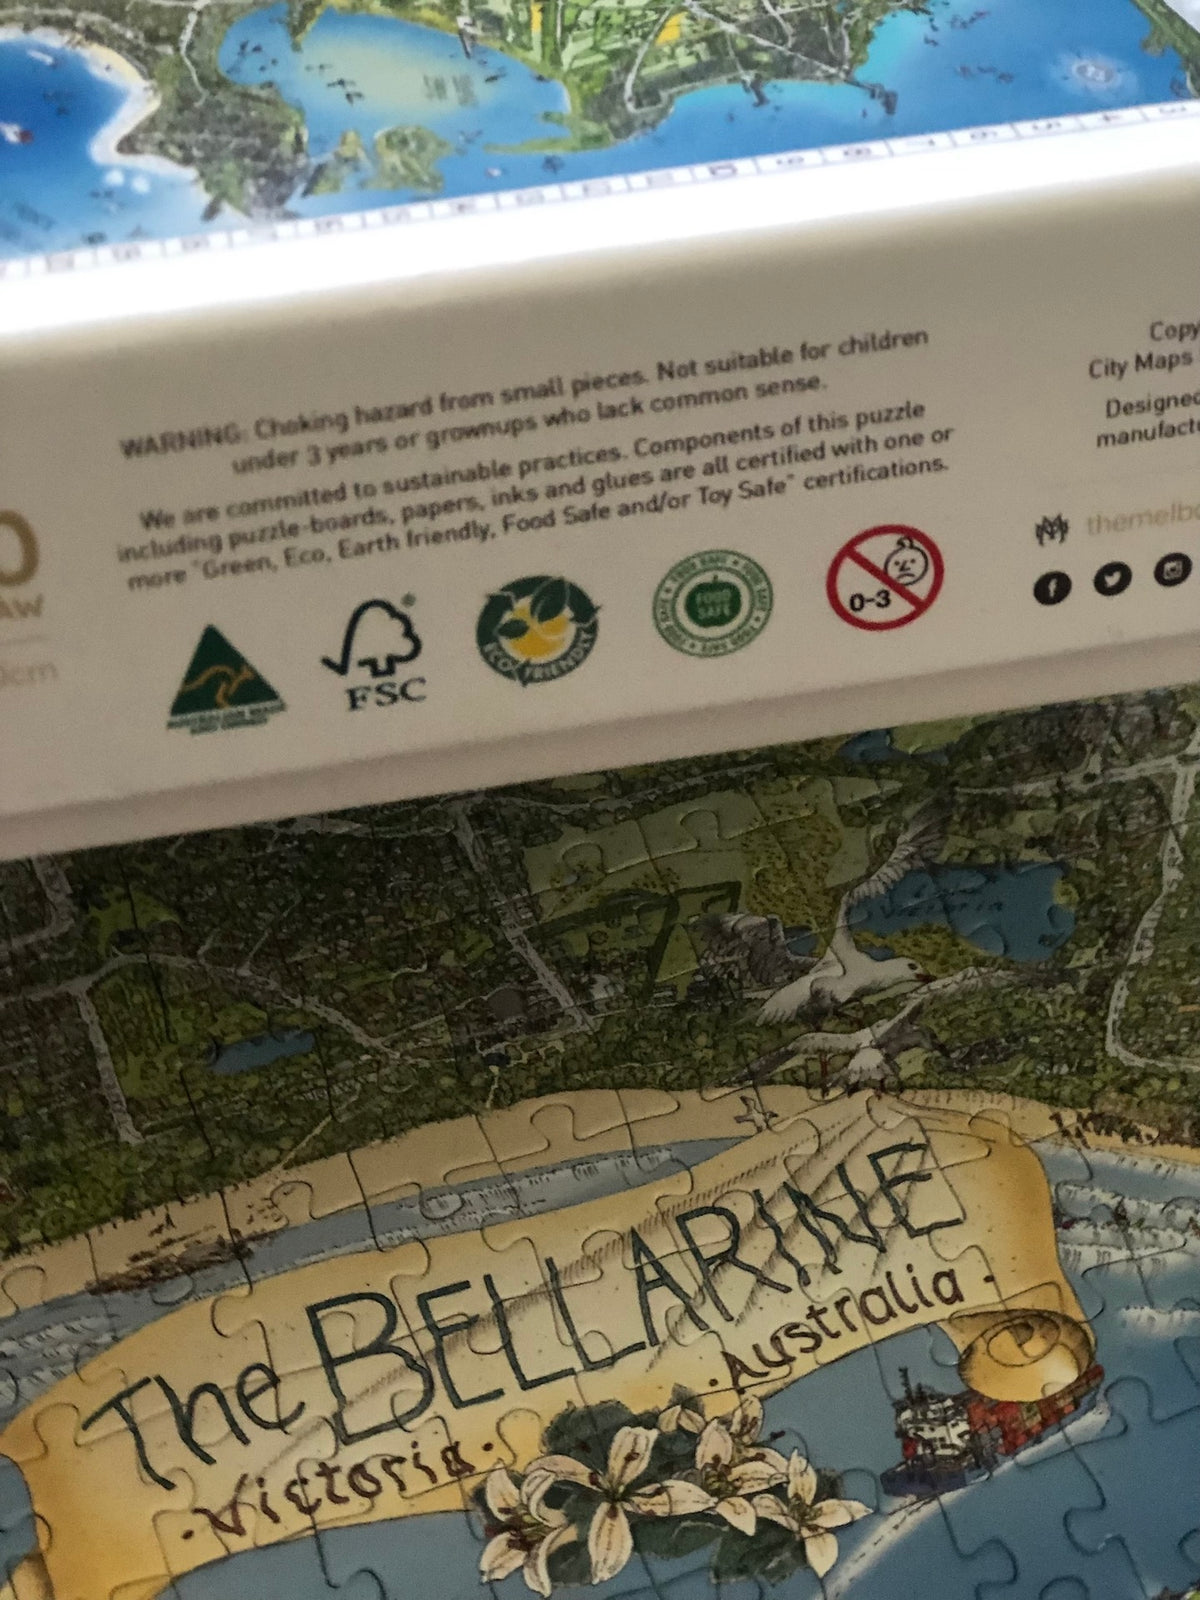 The Bellarine Map Jigsaw Puzzle